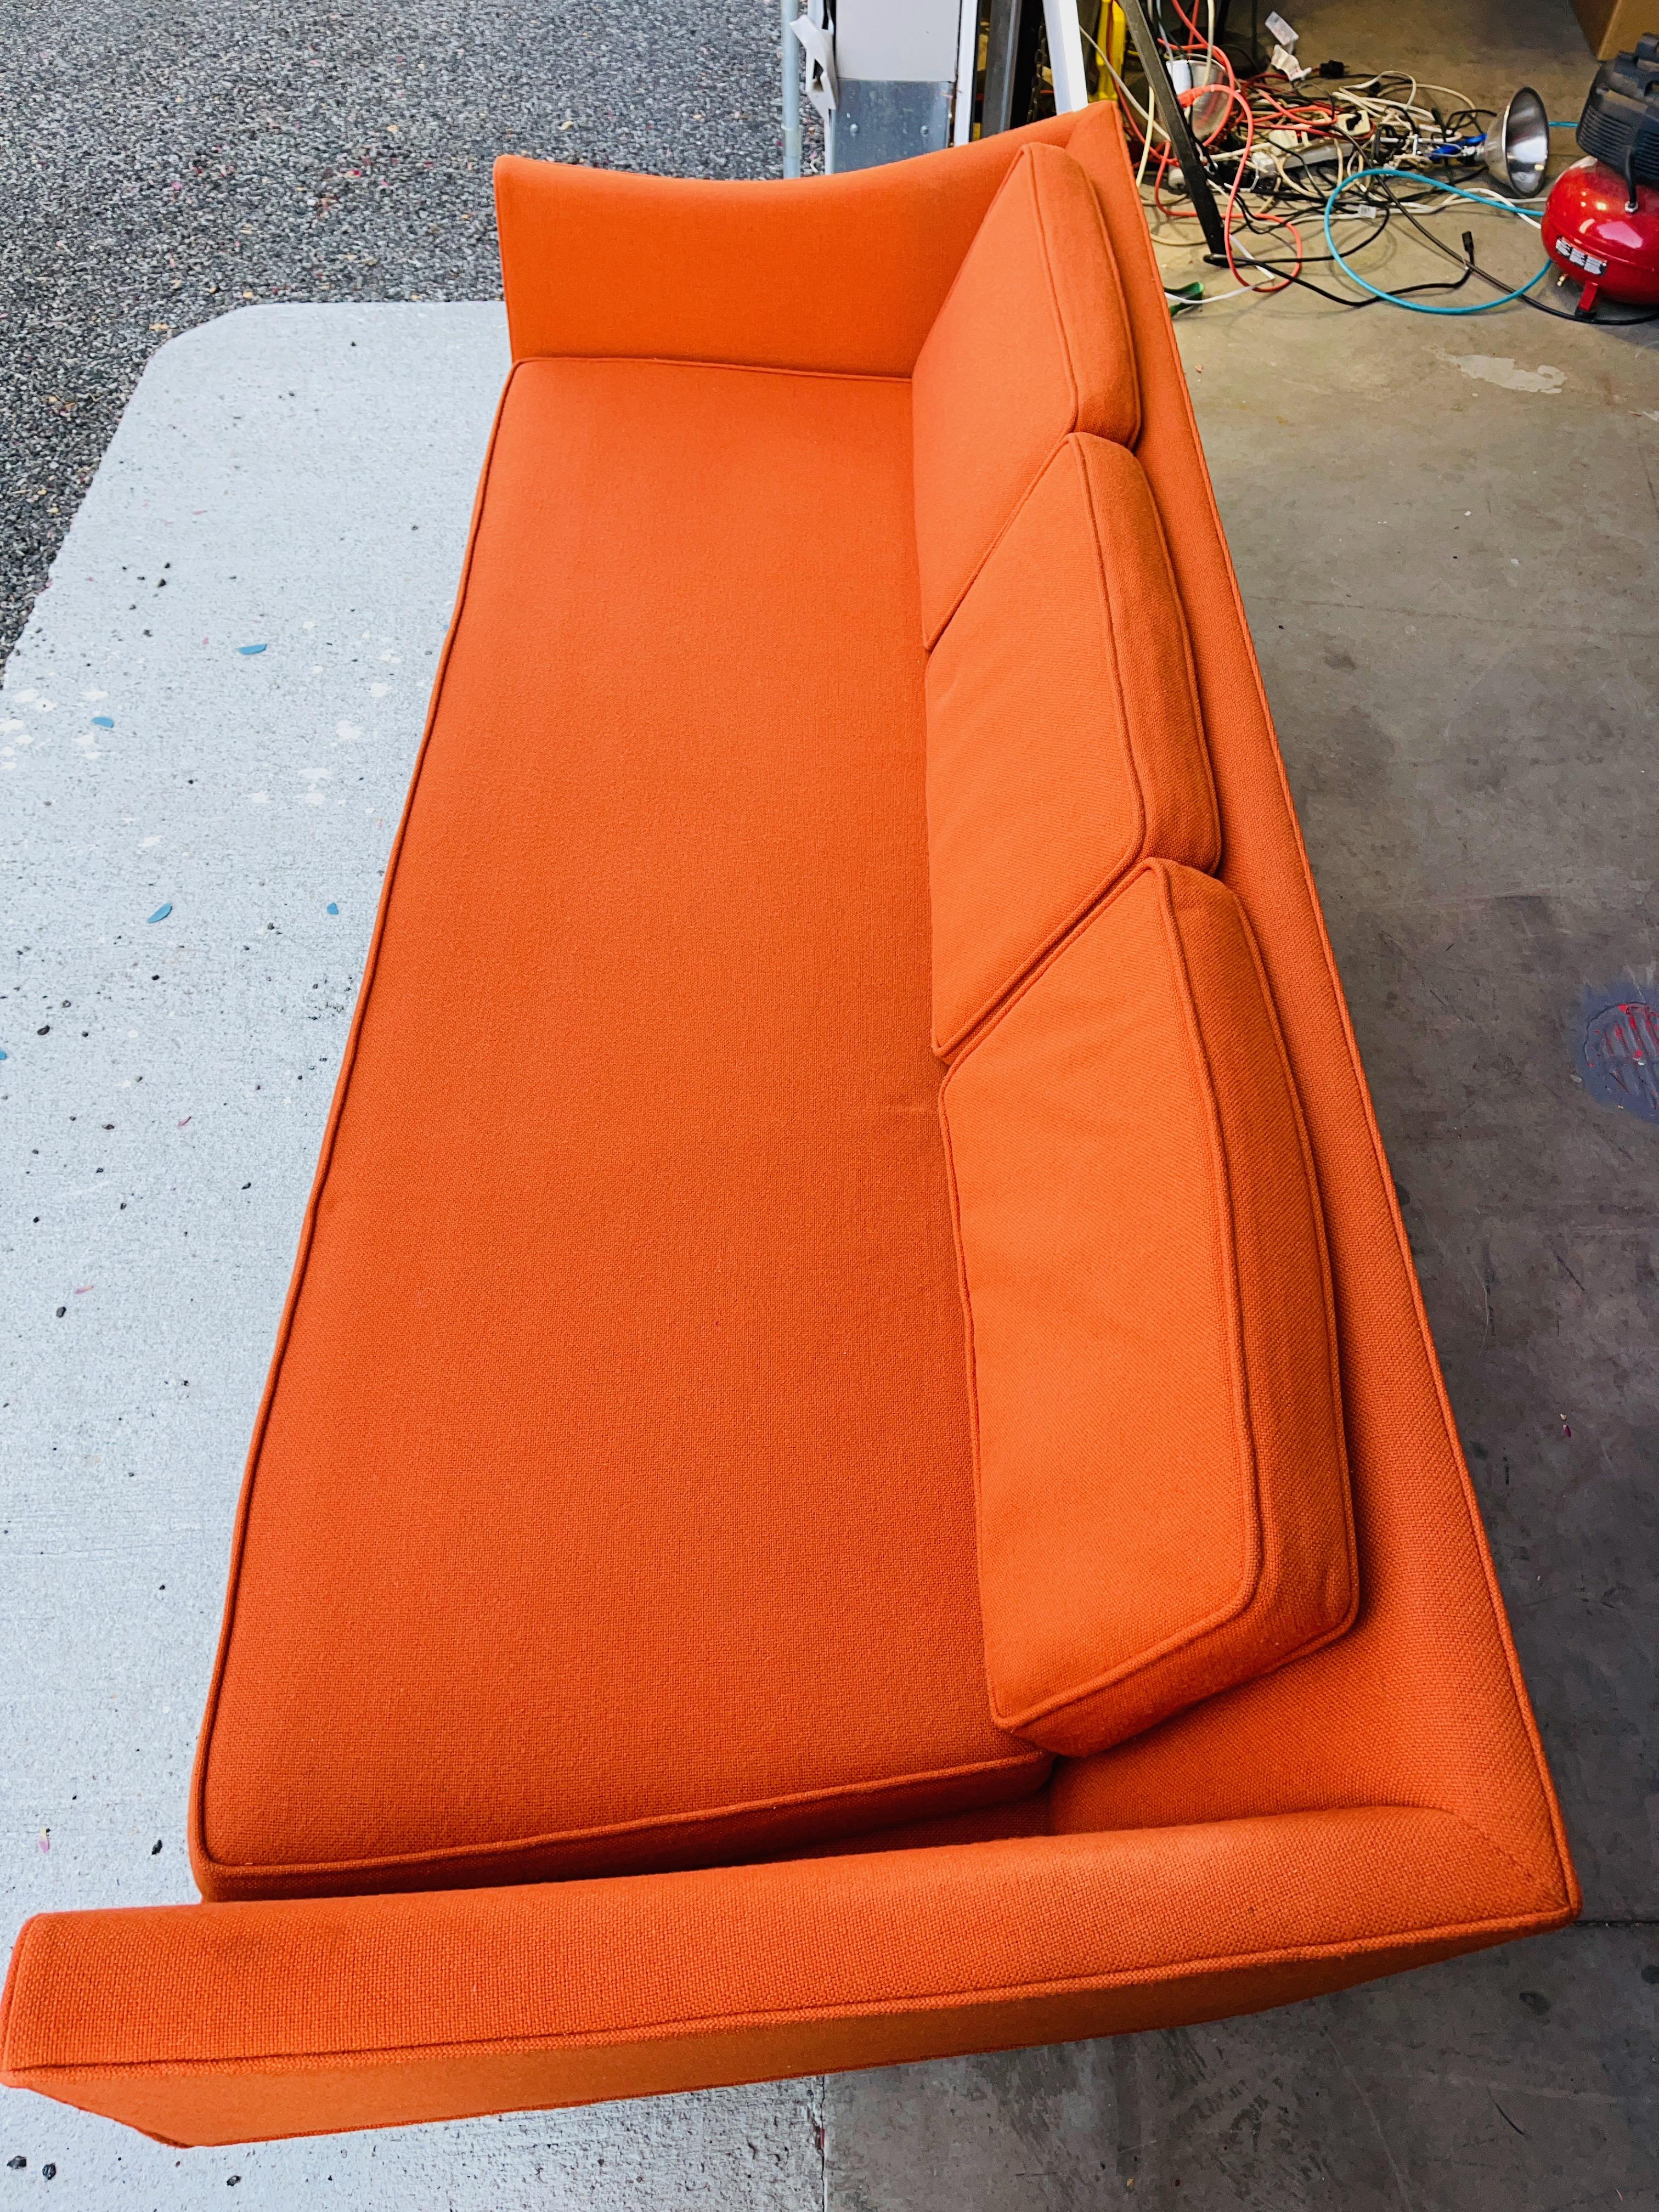 Harvey Probber Sloped Arm Sofa For Sale 4